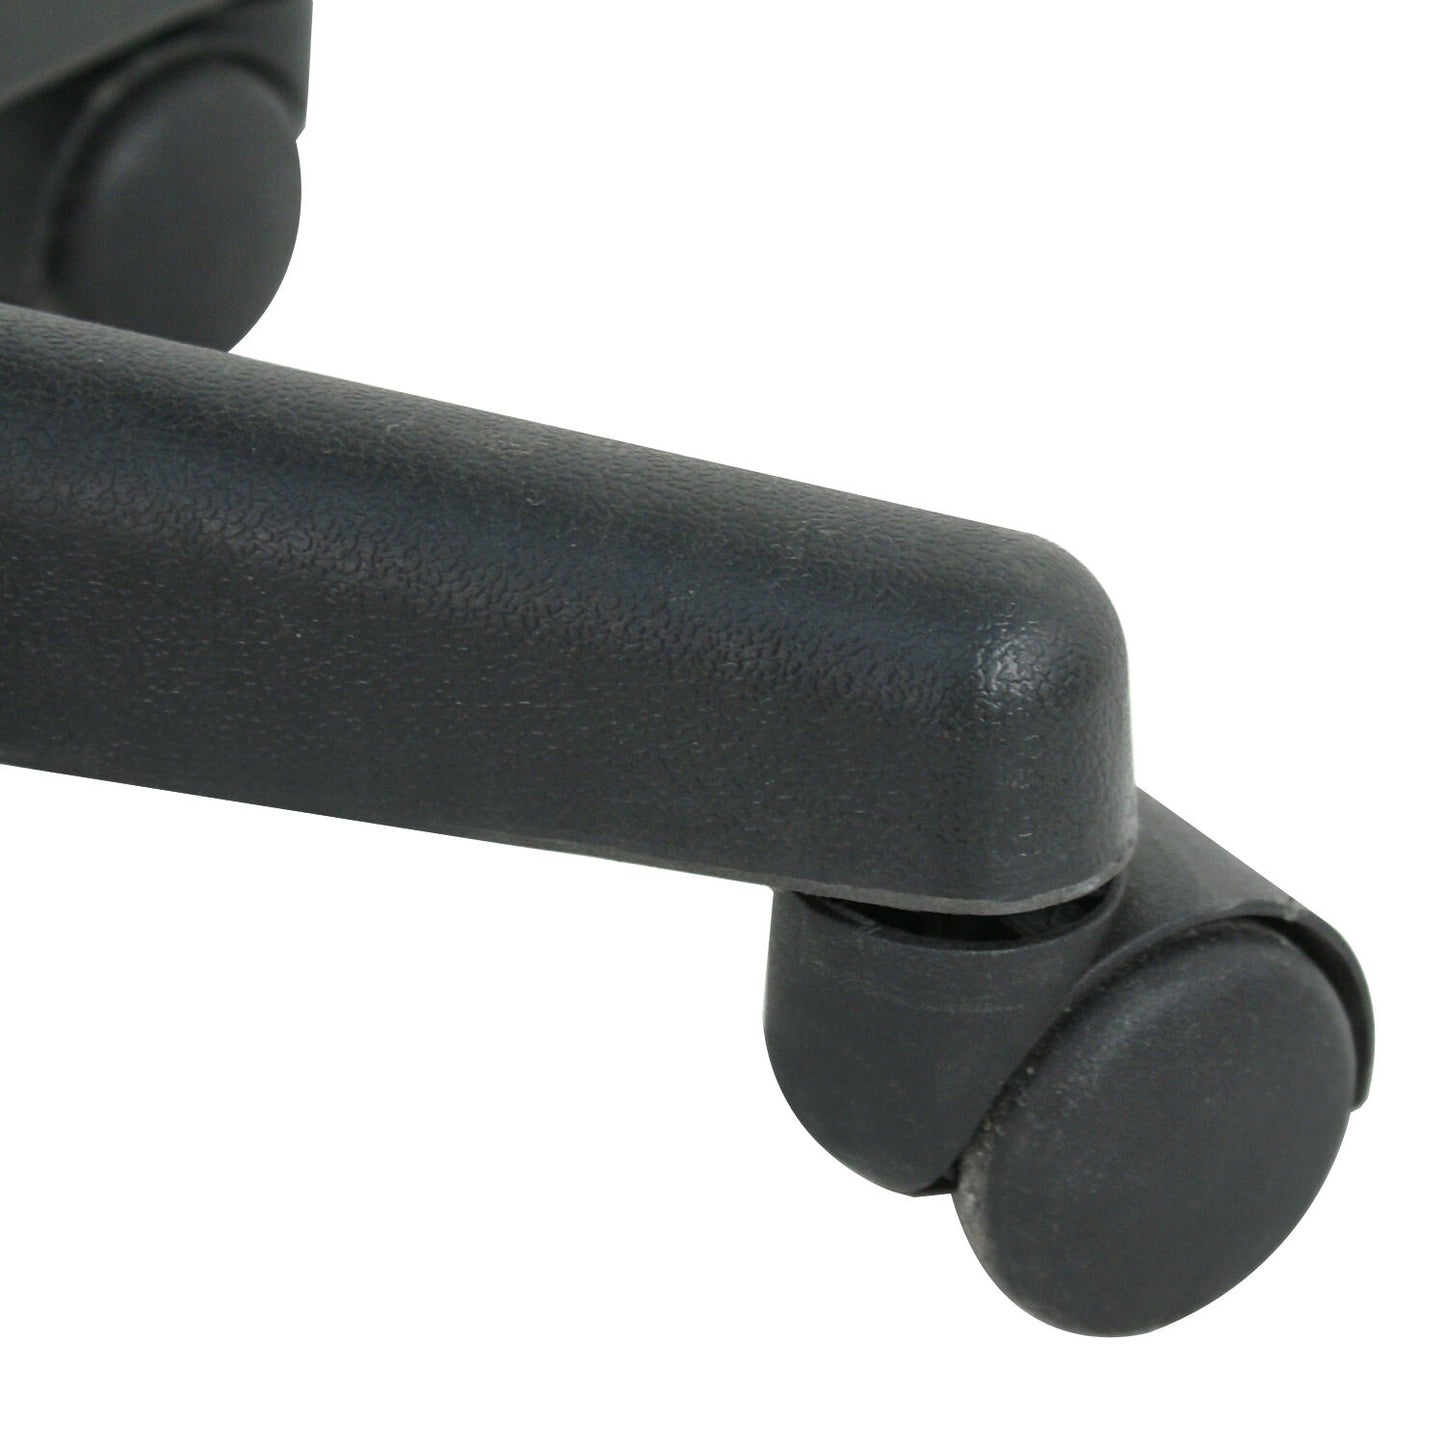 4PCS Adjustable Swivel Hydraulic Leather Salon Stool Rolling Seat